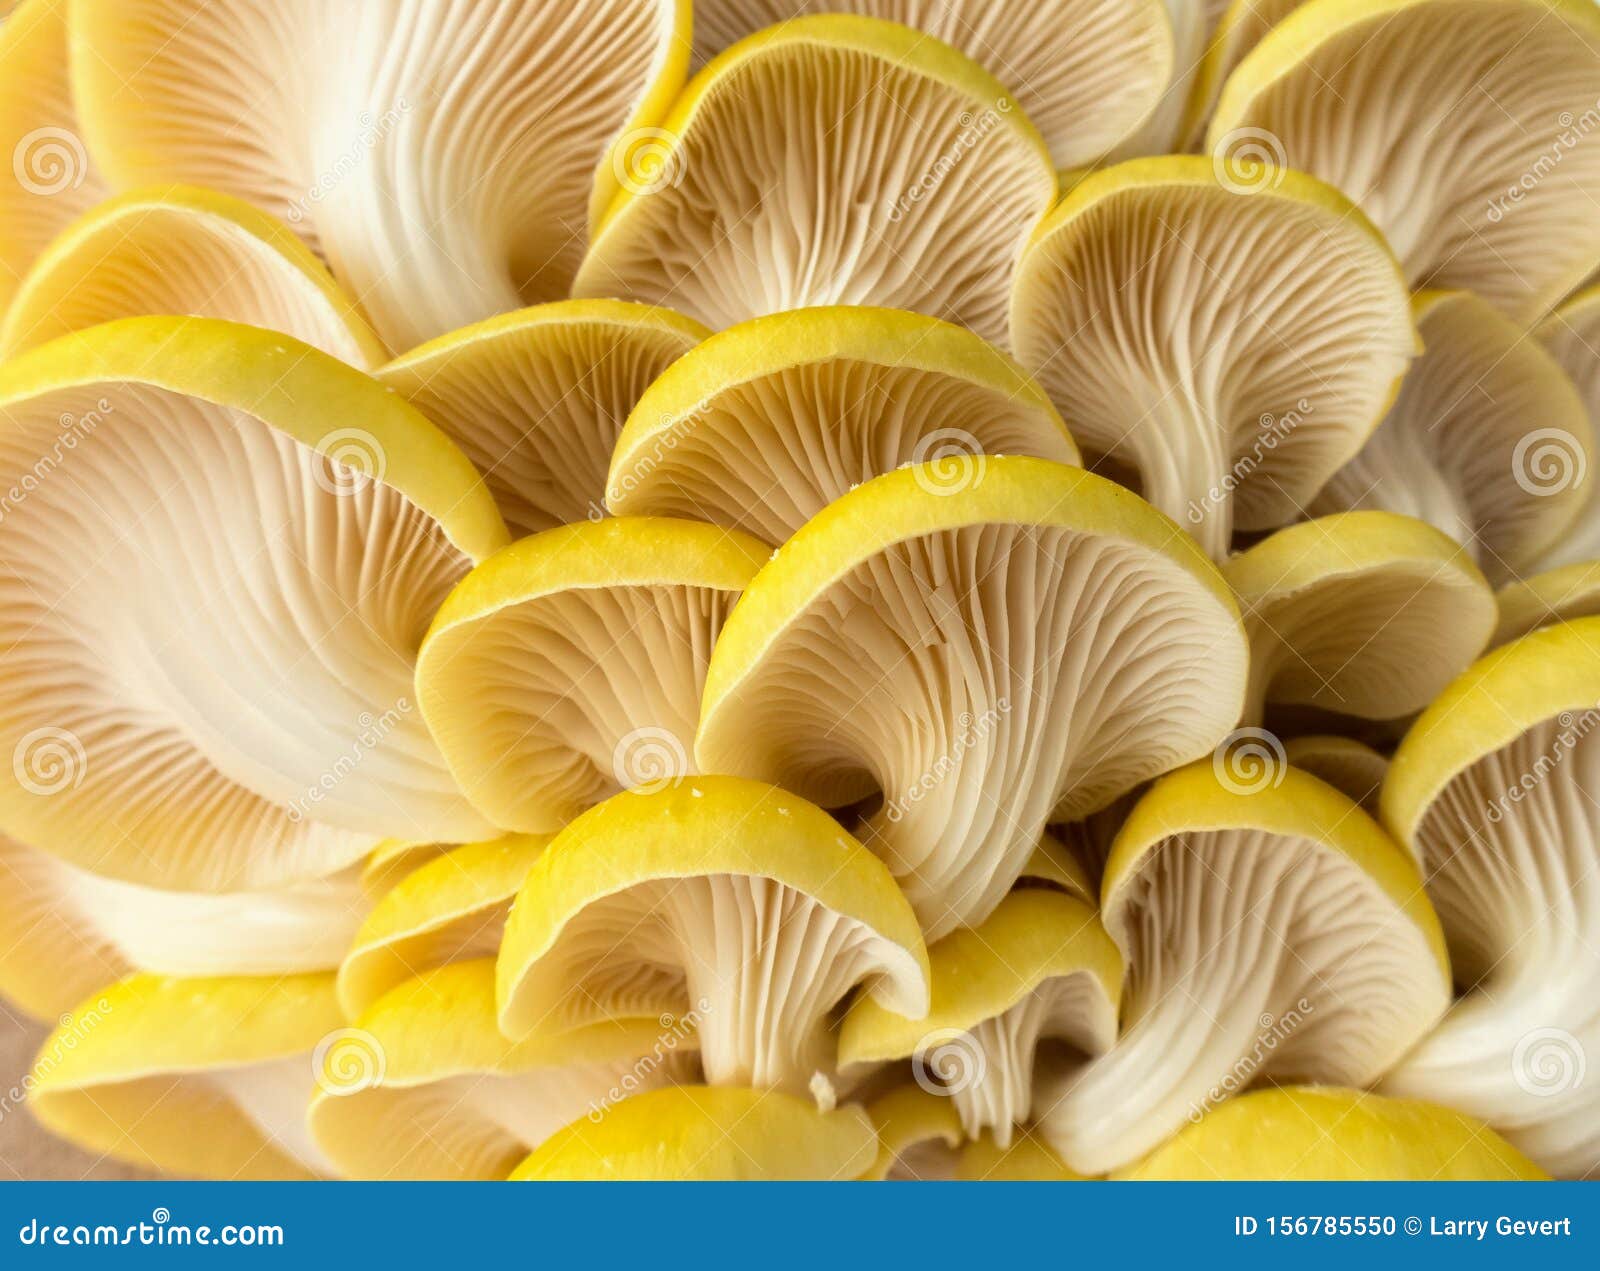 beautiful yellow oyster mushrooms